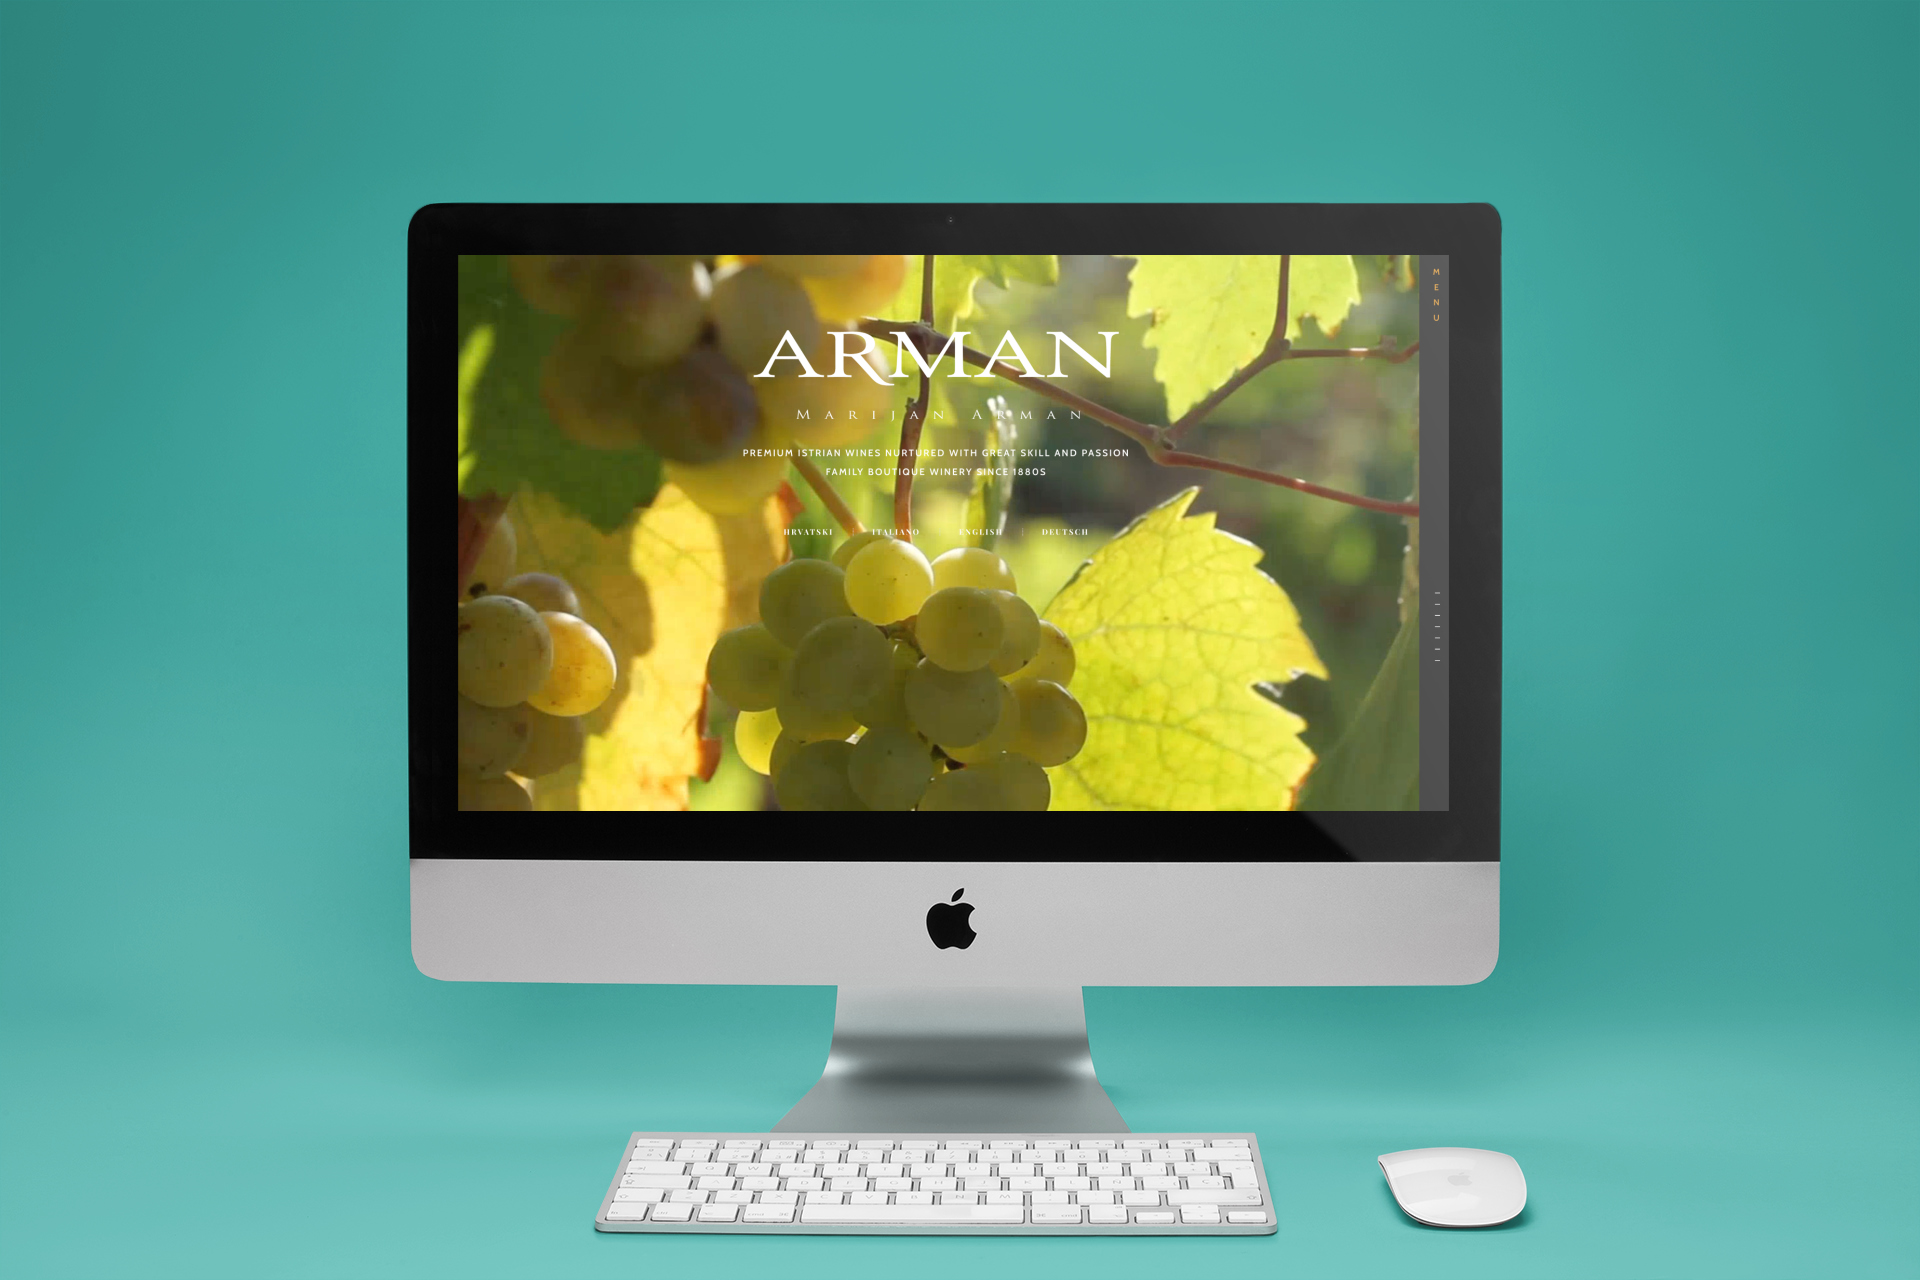 Arman wines